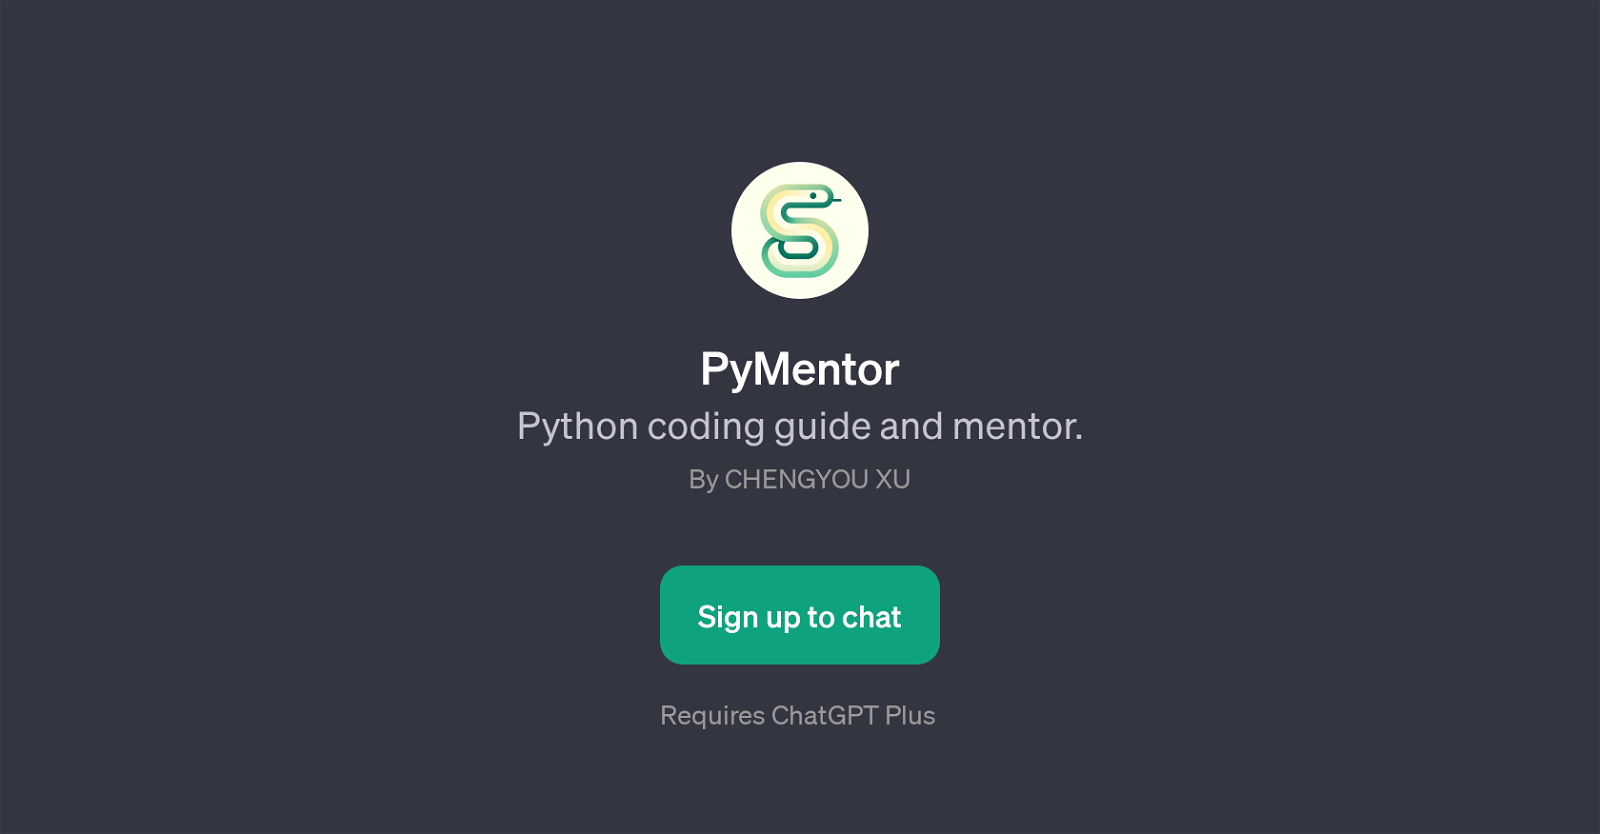 PyMentor website